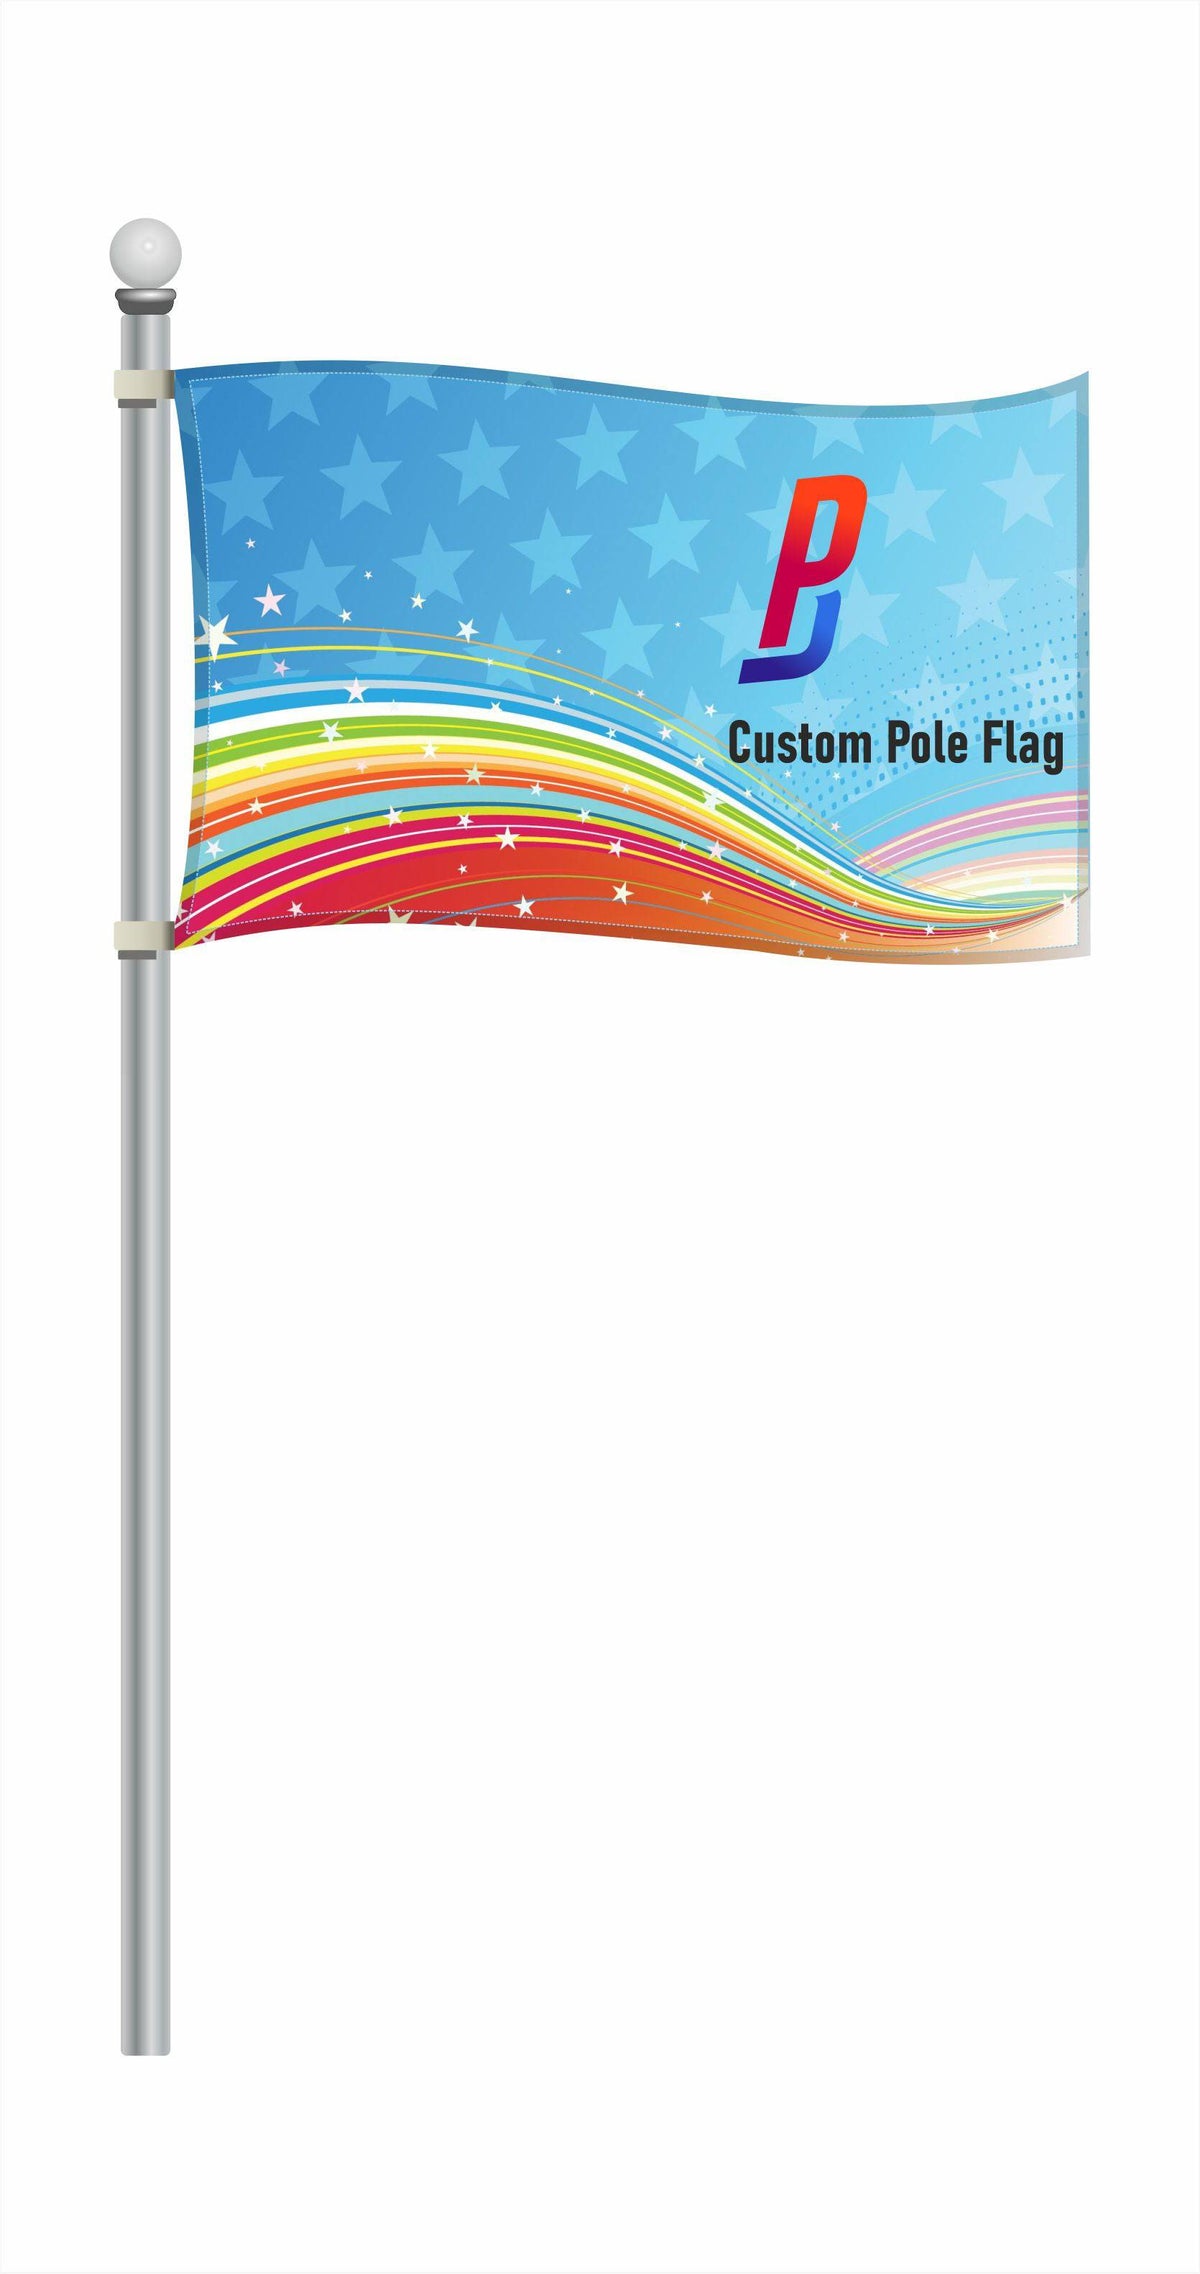 Custom Pole Flag 5'x3' - Print Banners NYC